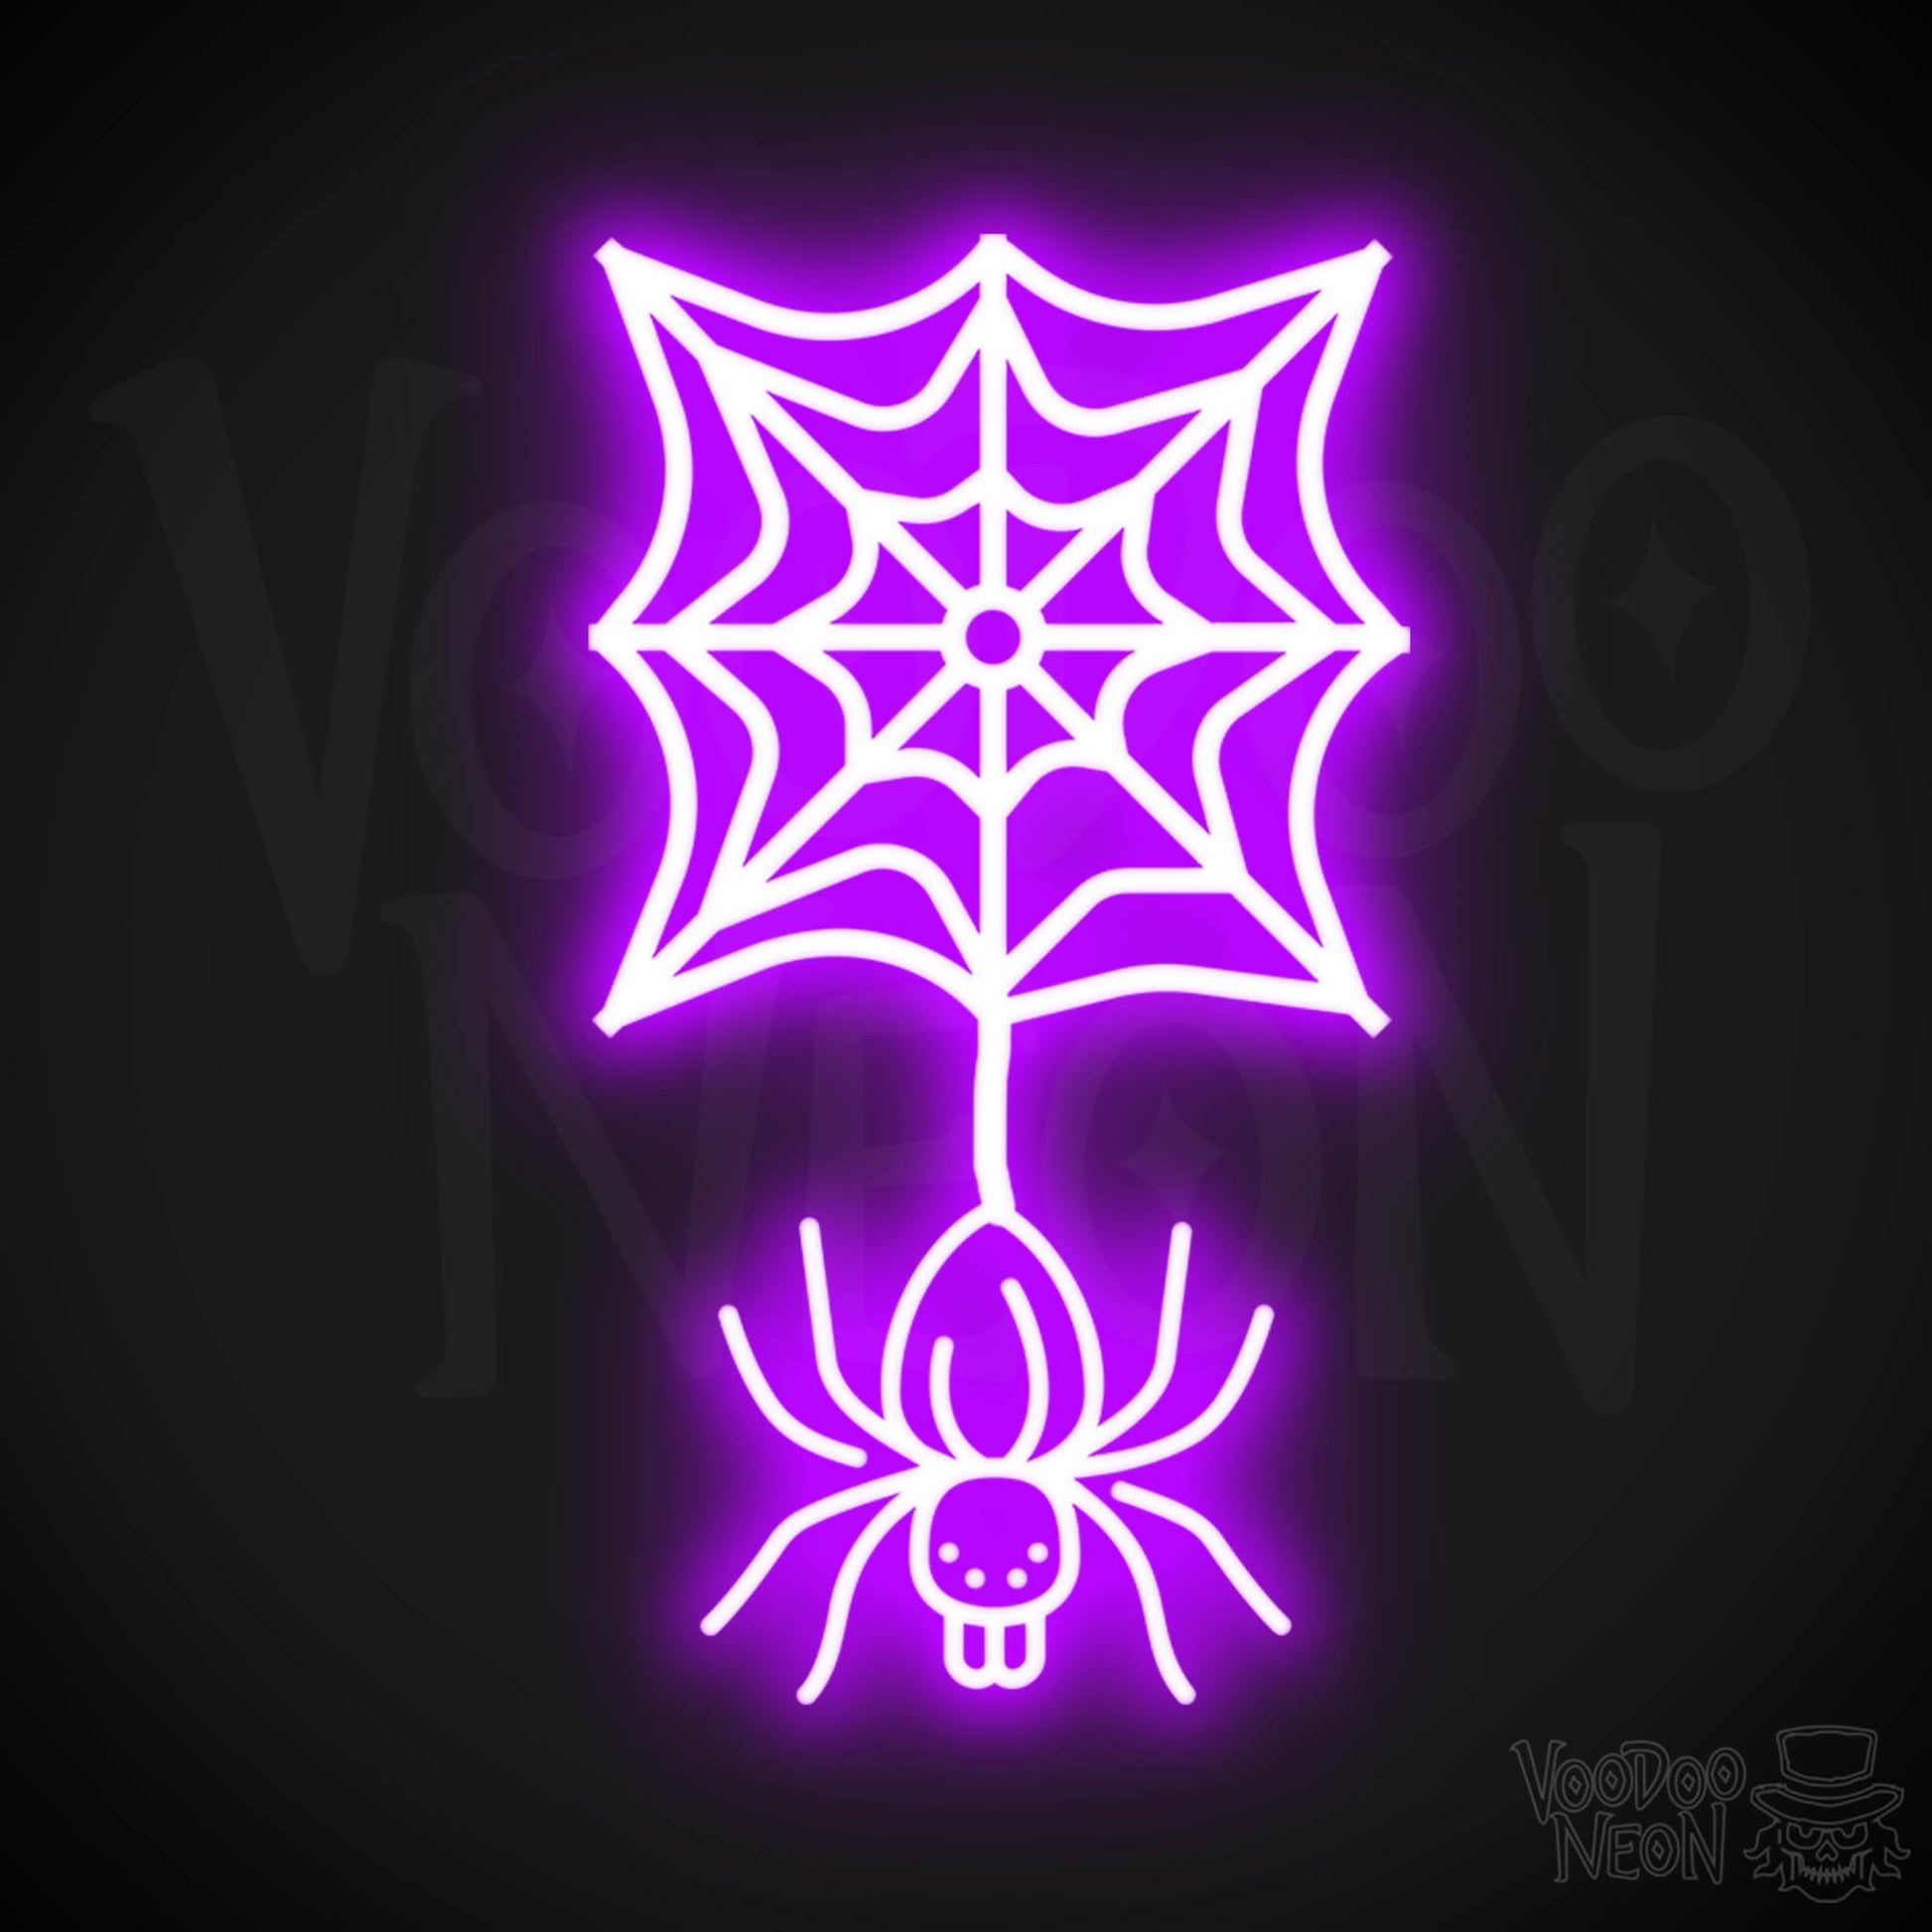 Neon Spider - Spider Neon Sign - Halloween LED Neon Spider - Color Purple